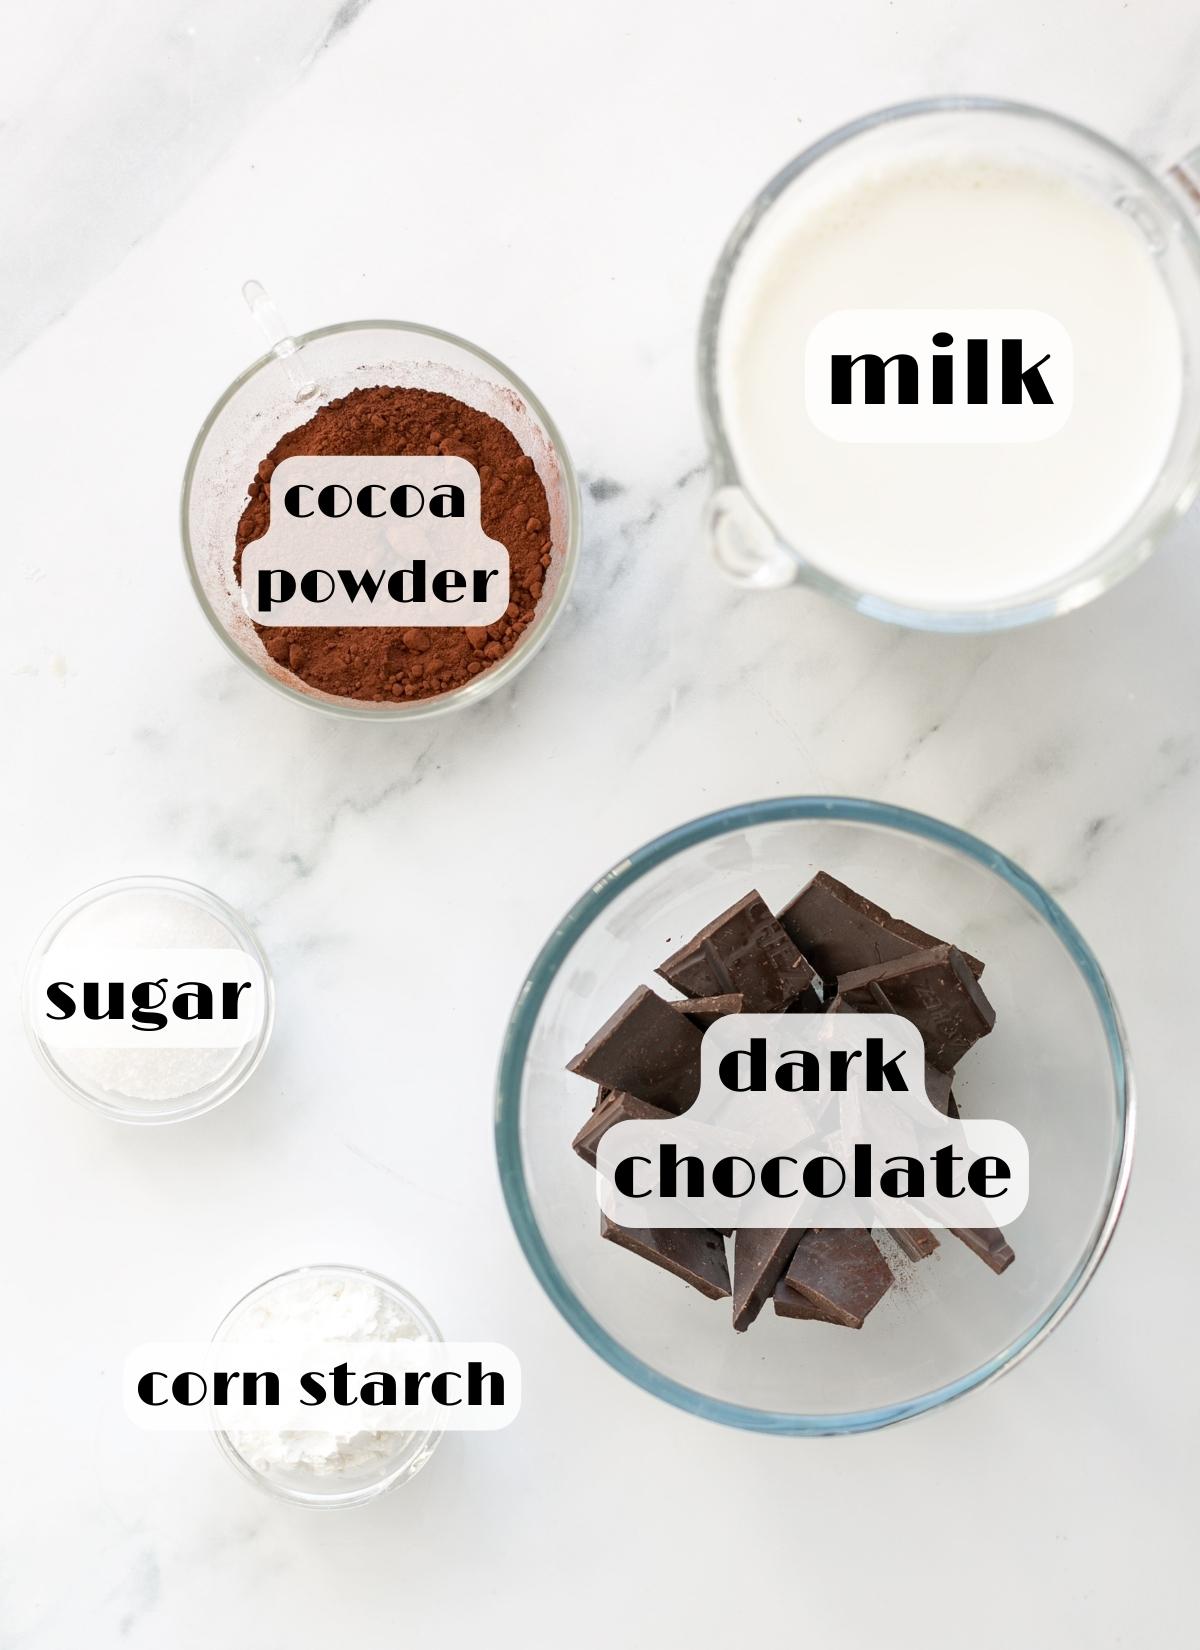 Italian hot chocolate ingredients: cocoa powder, dark chocolate, milk, corn starch, sugar.